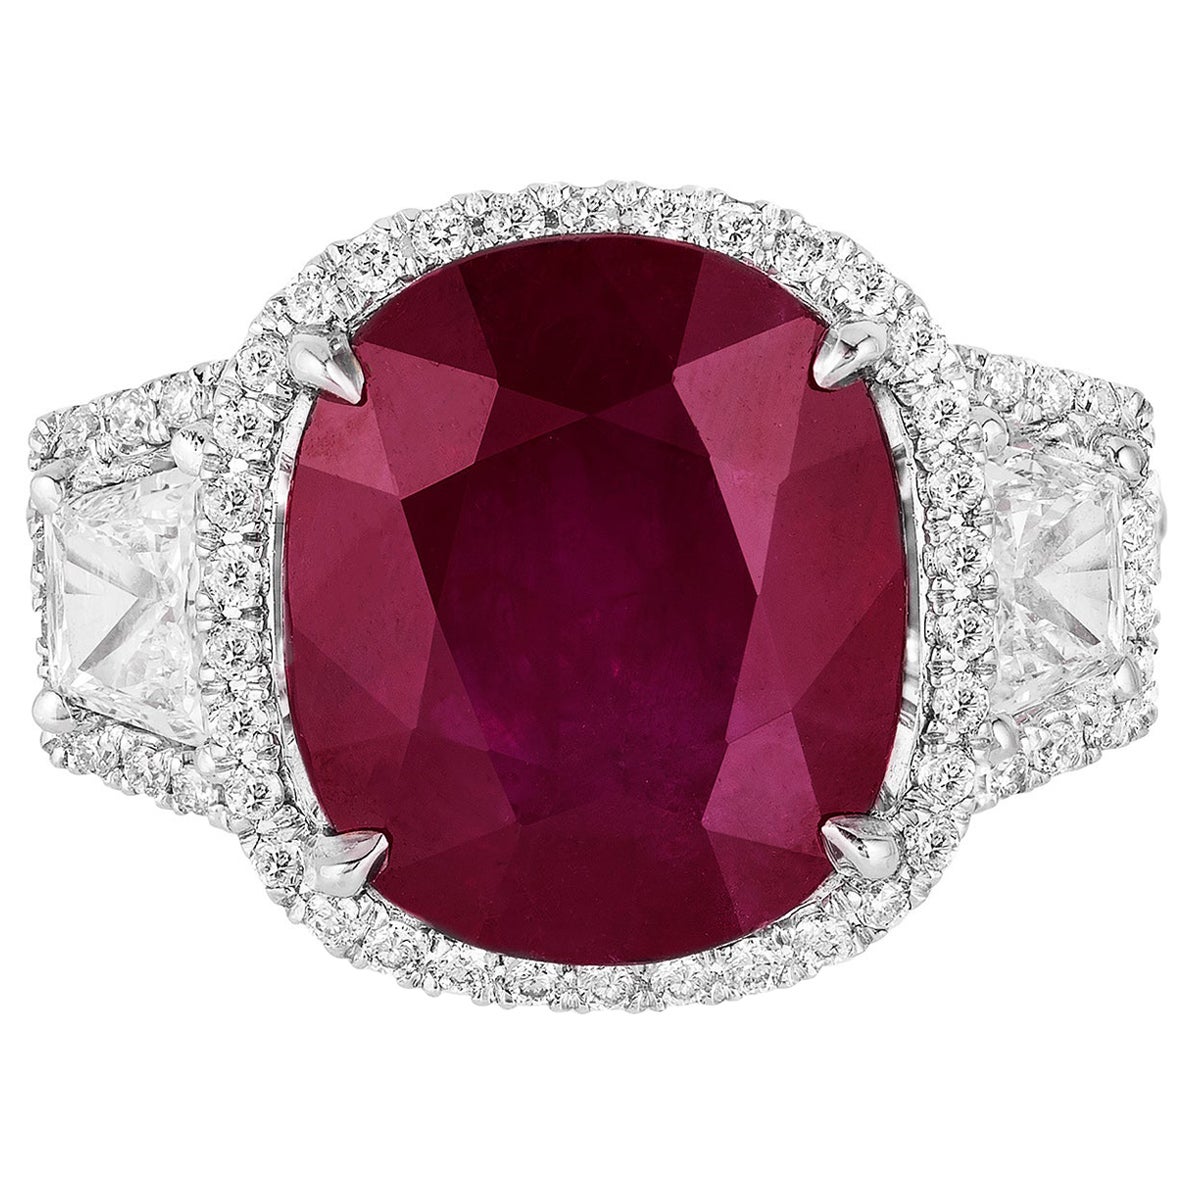 Andreoli 7.37 Carat Burma Ruby Diamond 18 Karat White Gold Ring CDC Certified